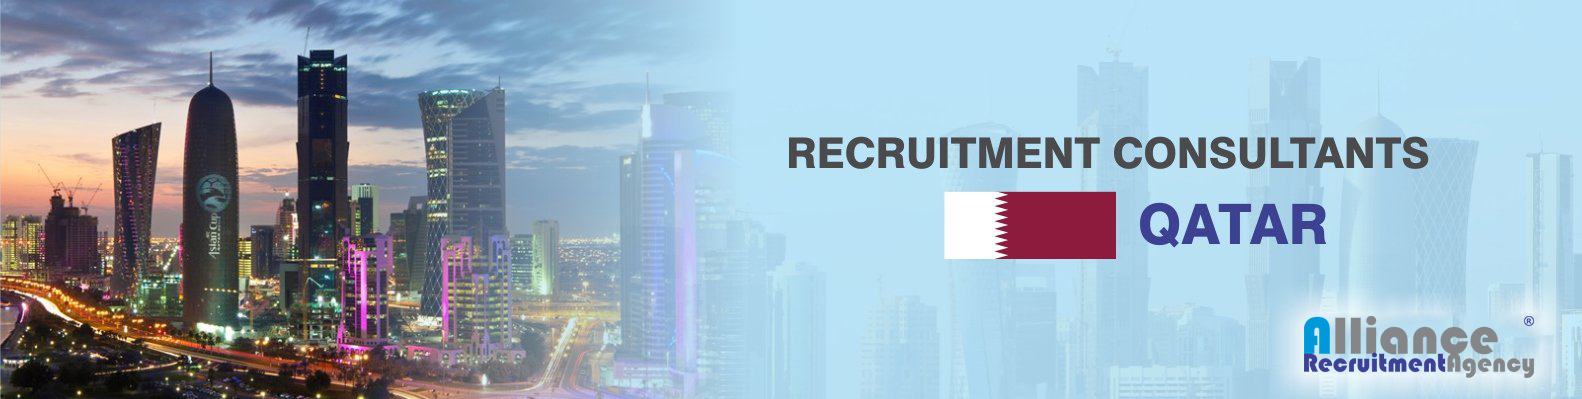 qatar recruitment agency